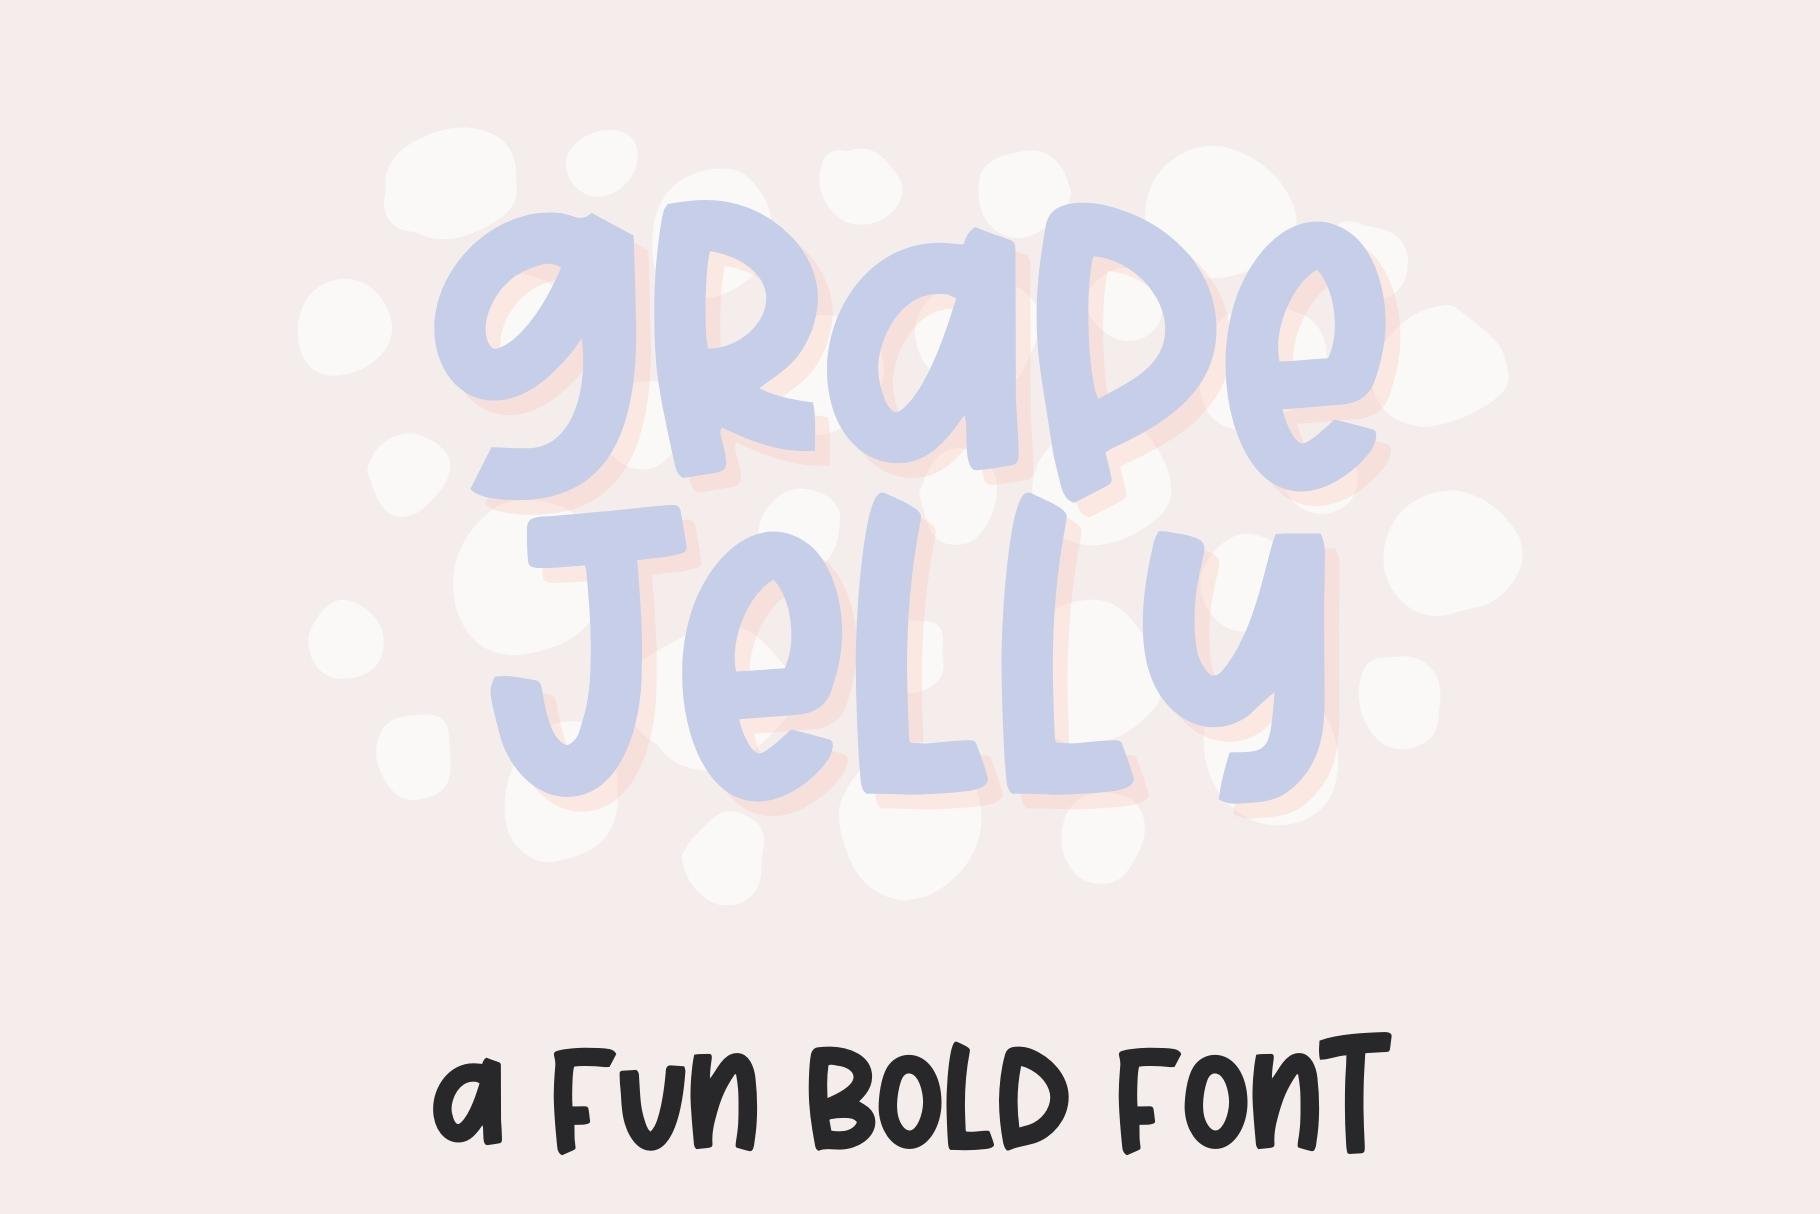 Grape Jelly, Bold Handwritten Font cover image.